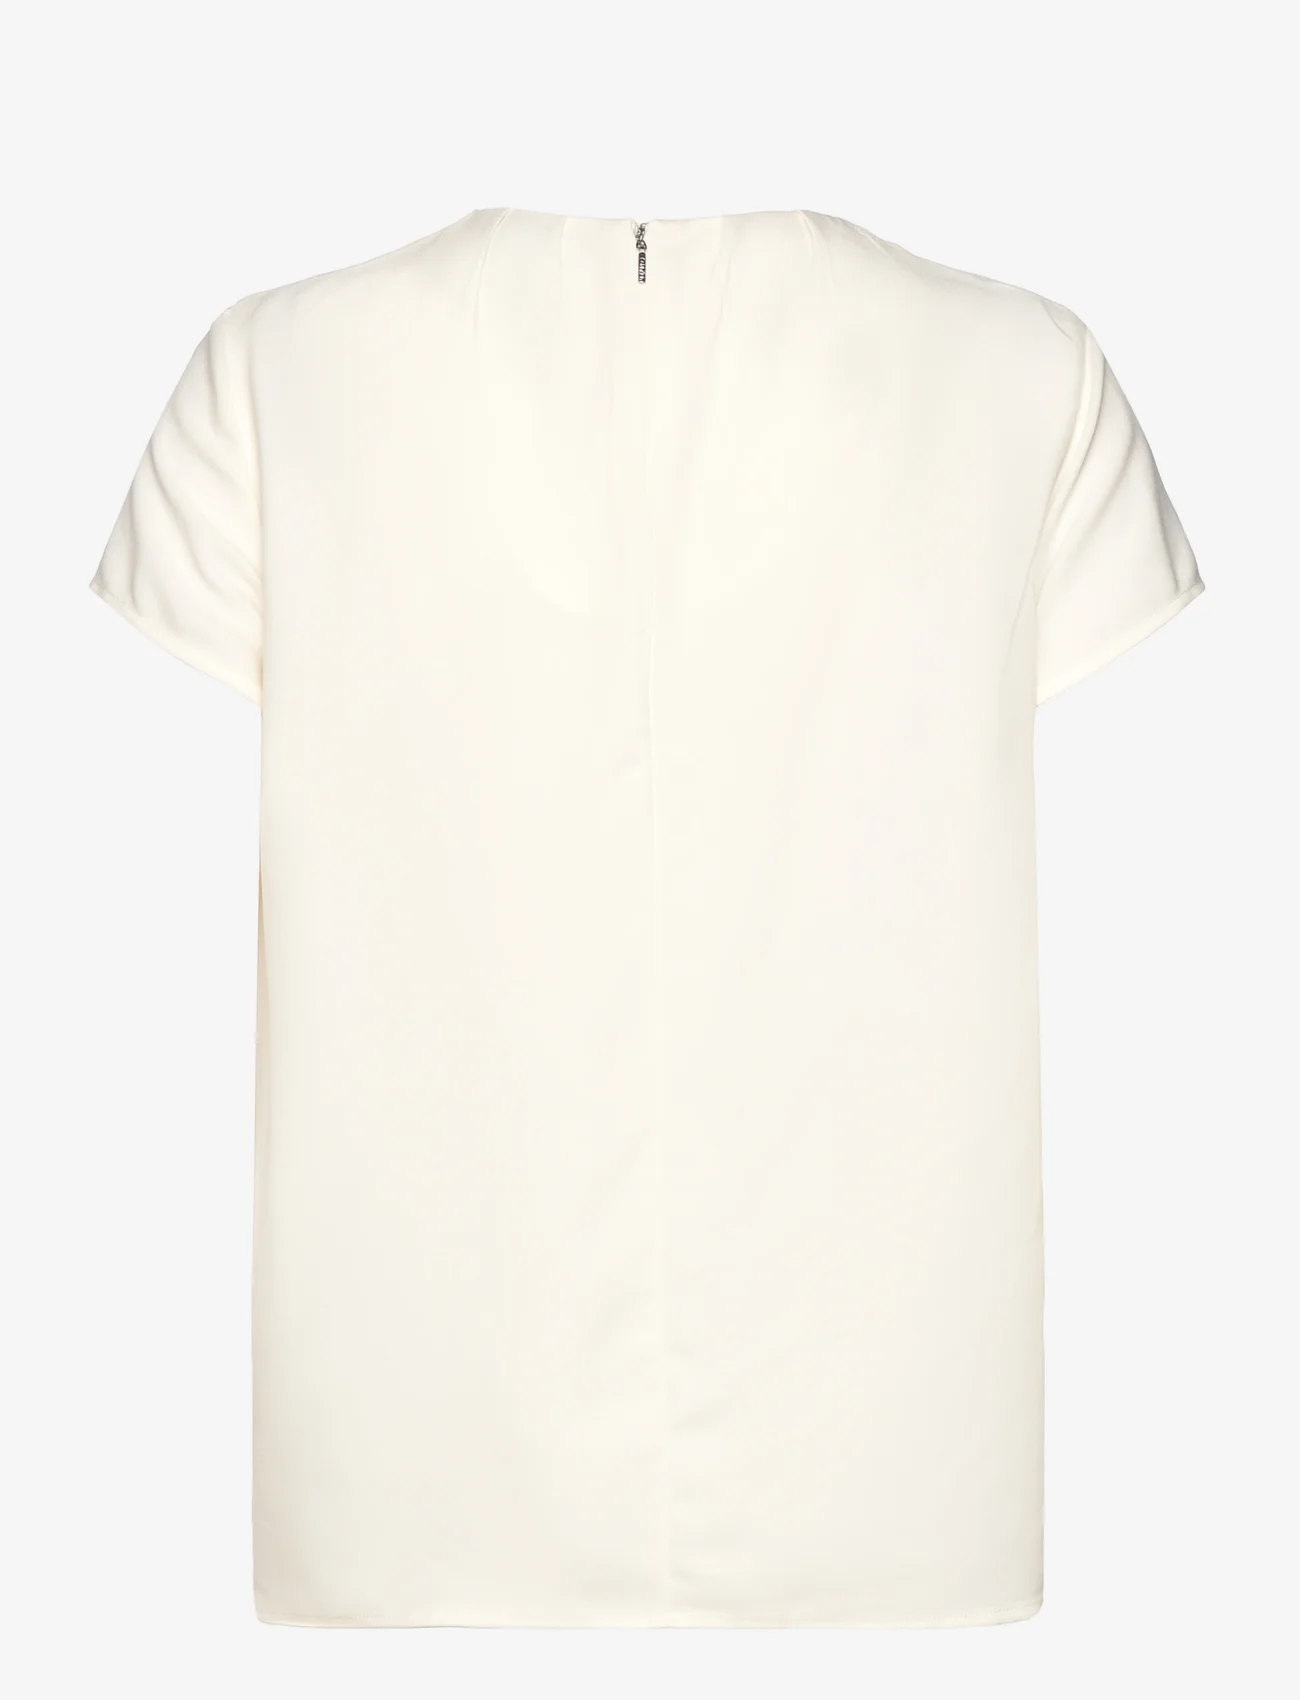 Calvin Klein - METAL BAR SHORT SLEEVE BLOUSE - blouses korte mouwen - vanilla ice - 1